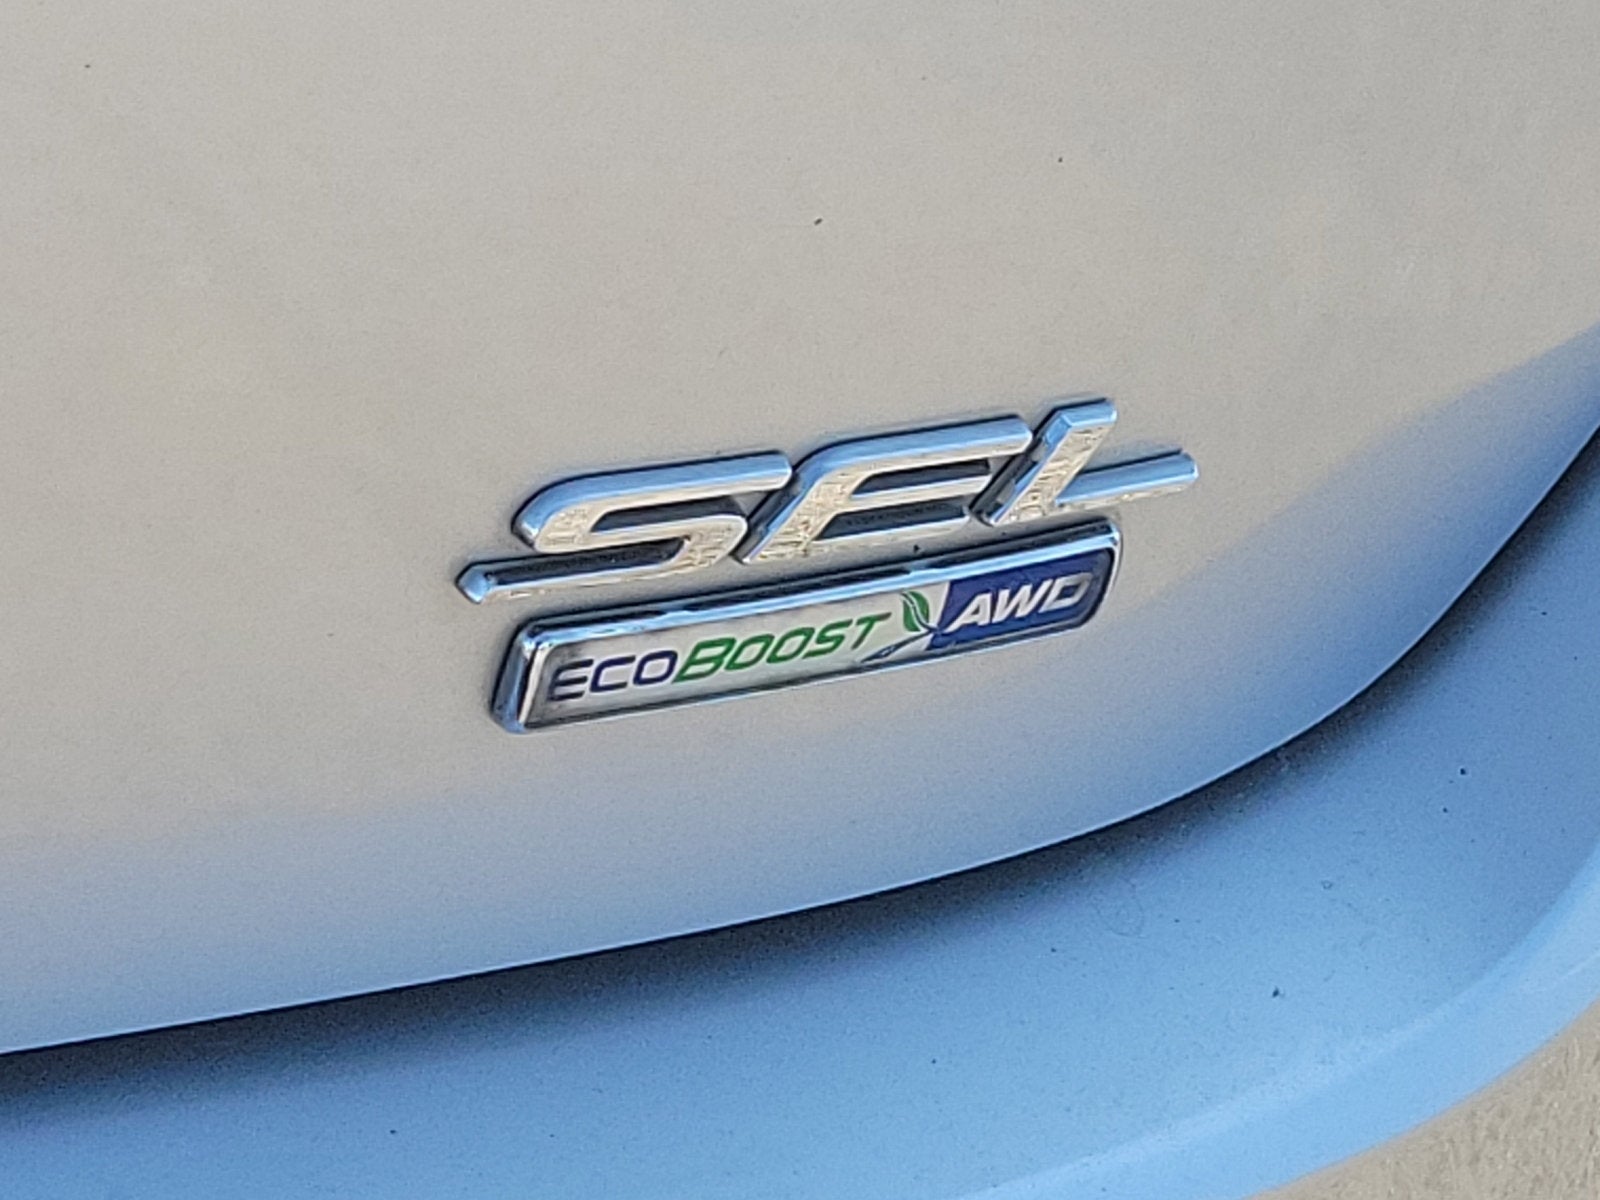 2015 Ford EDGE SEL